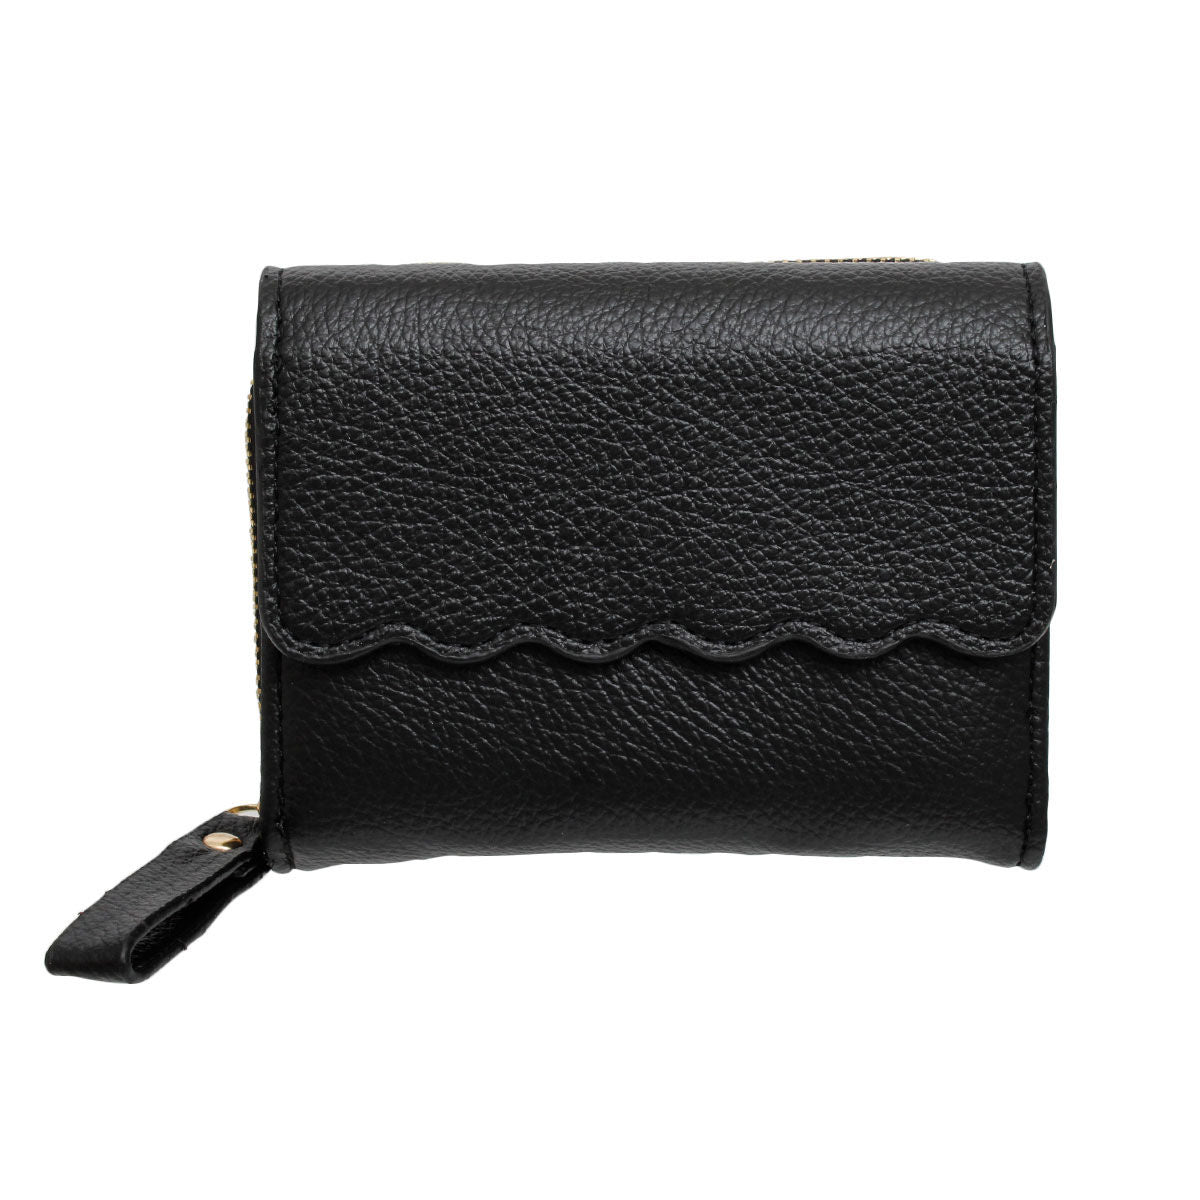 Accordian Wallet Black Snap Cardholder for Women